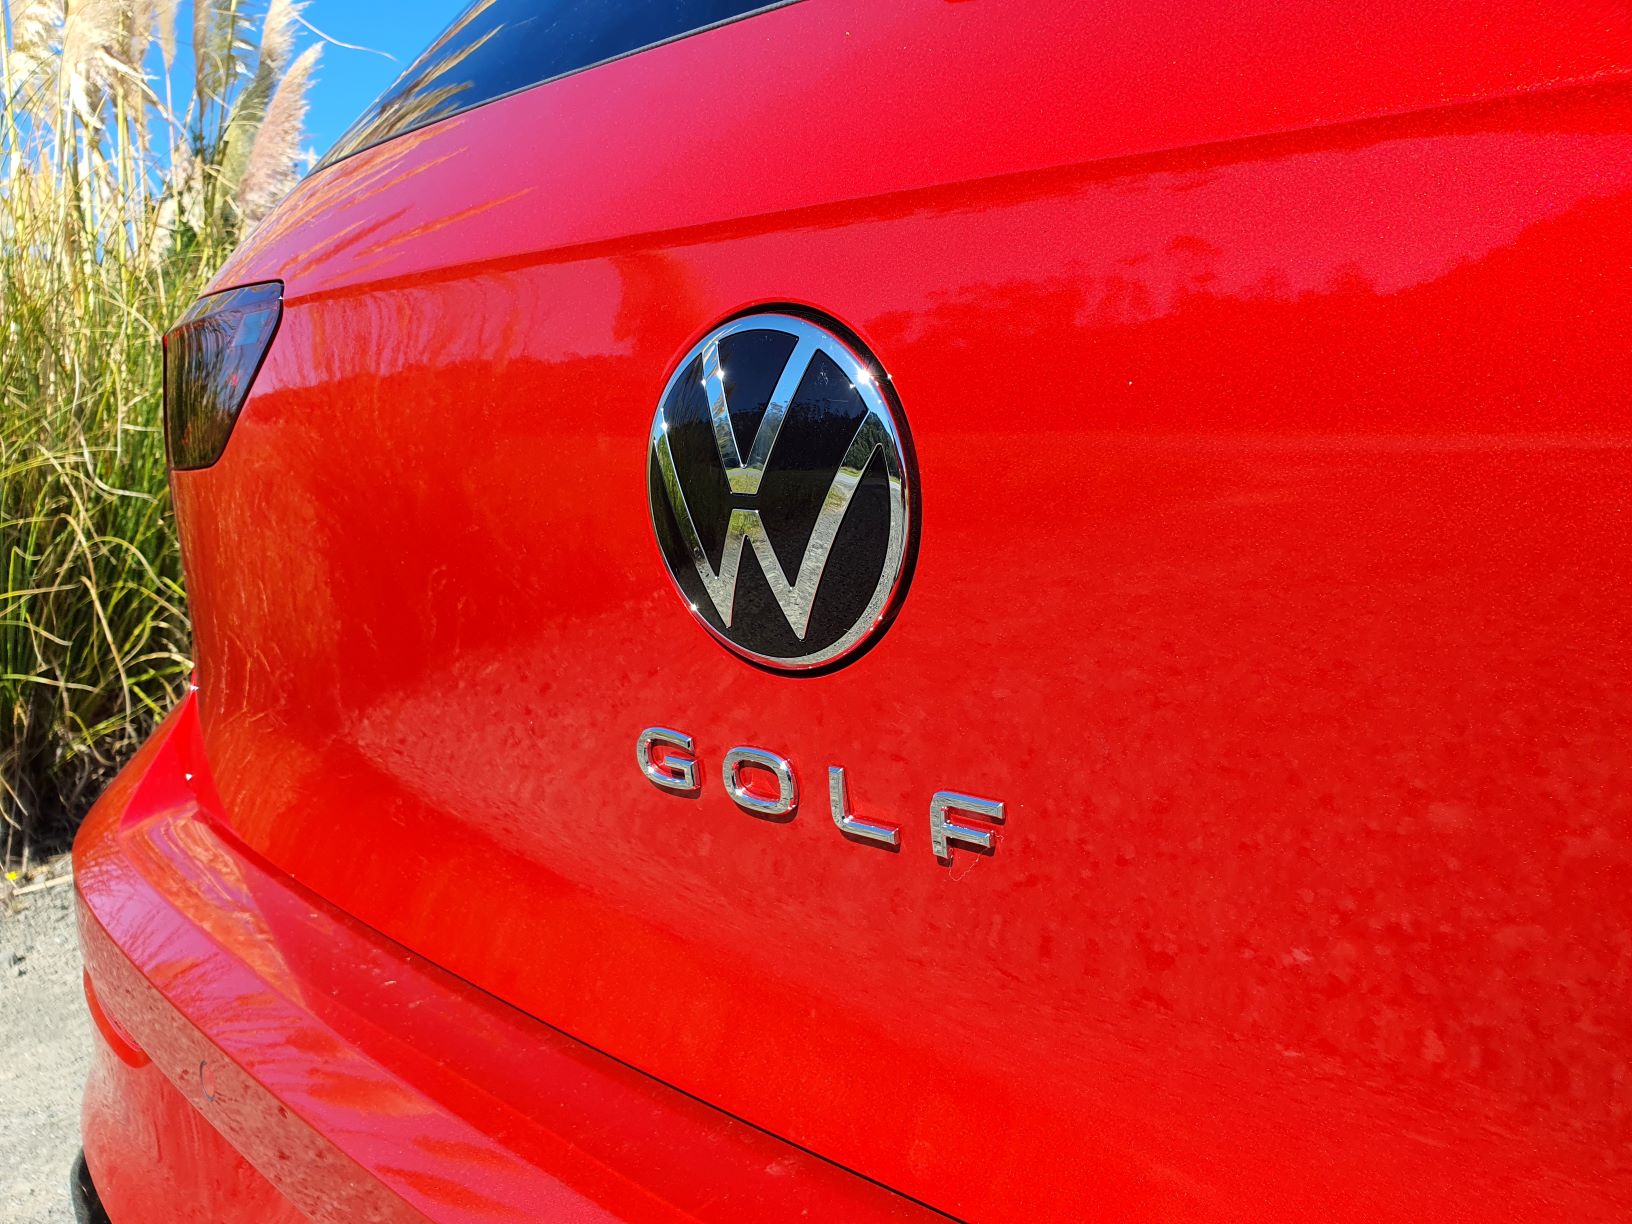 The MK8 VW Golf badge